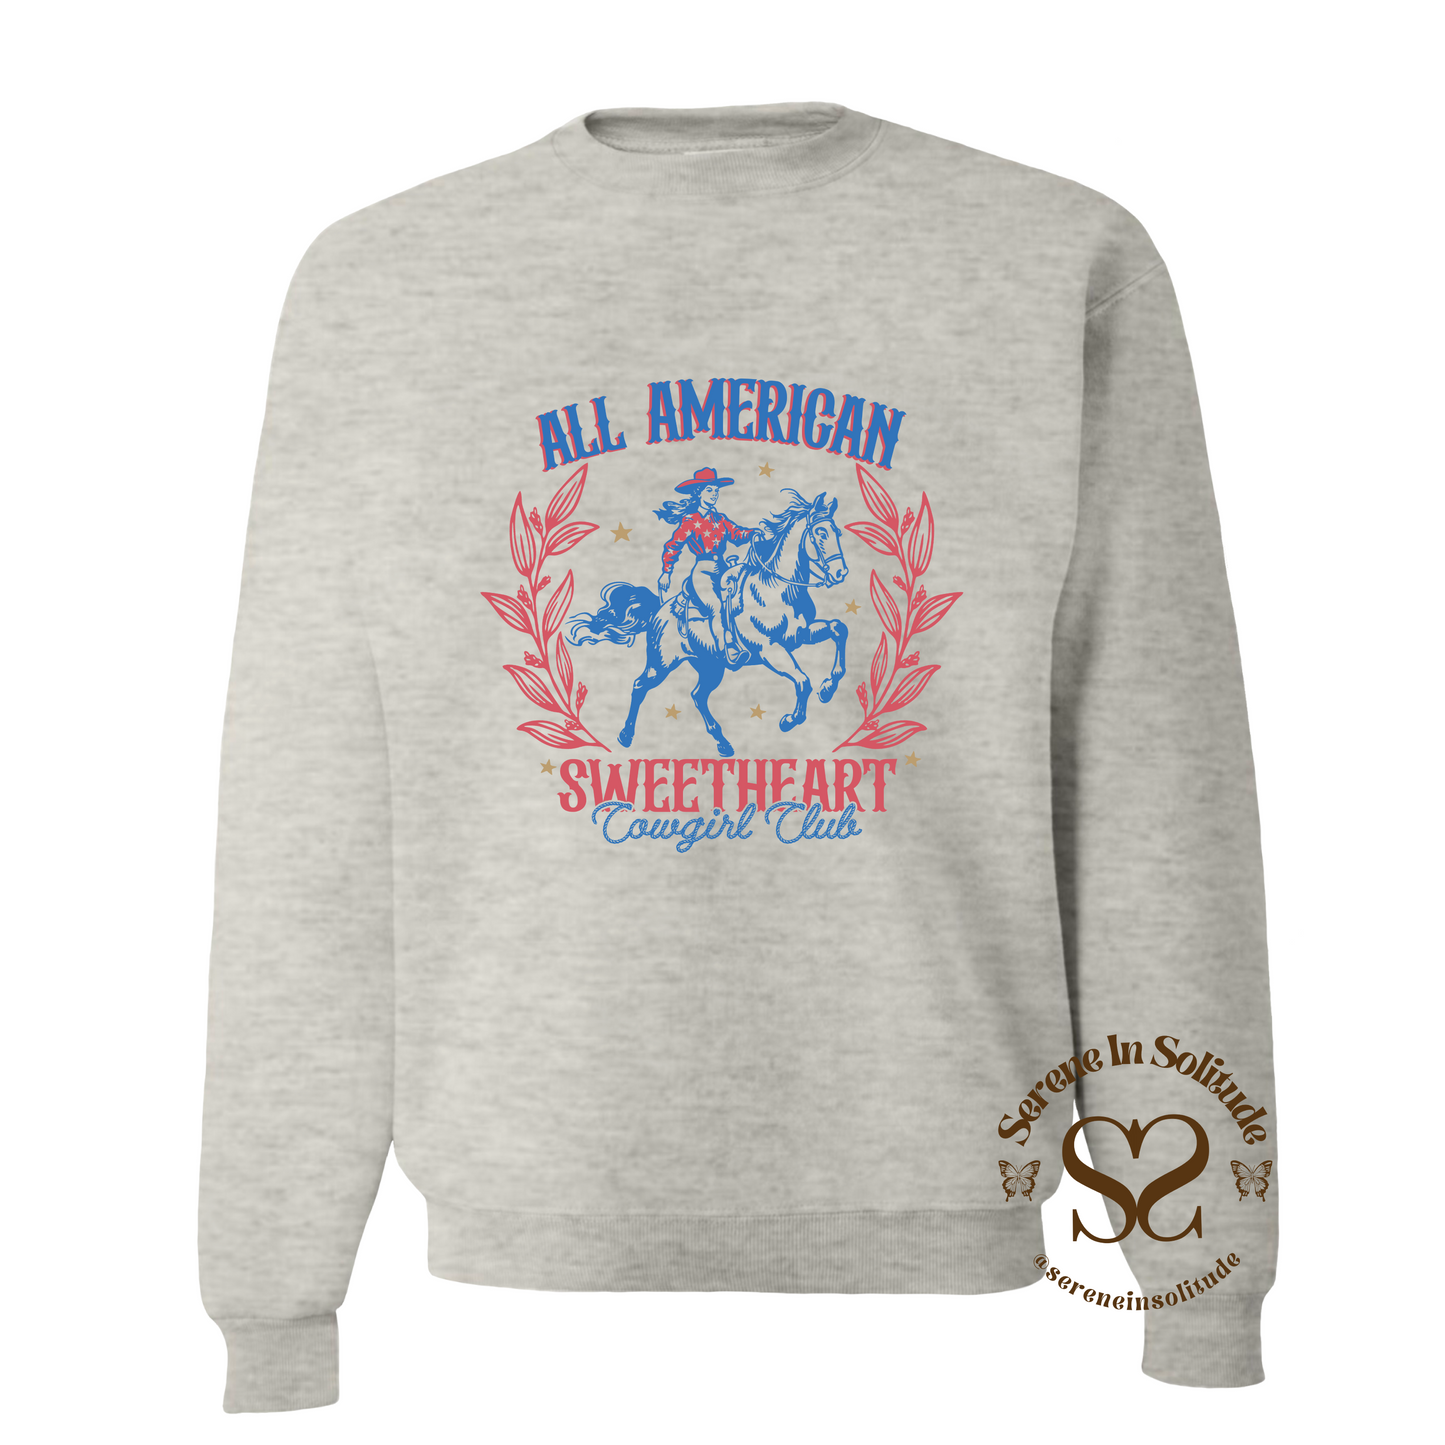 All American Sweetheart Cowgirl Club Sweatshirt